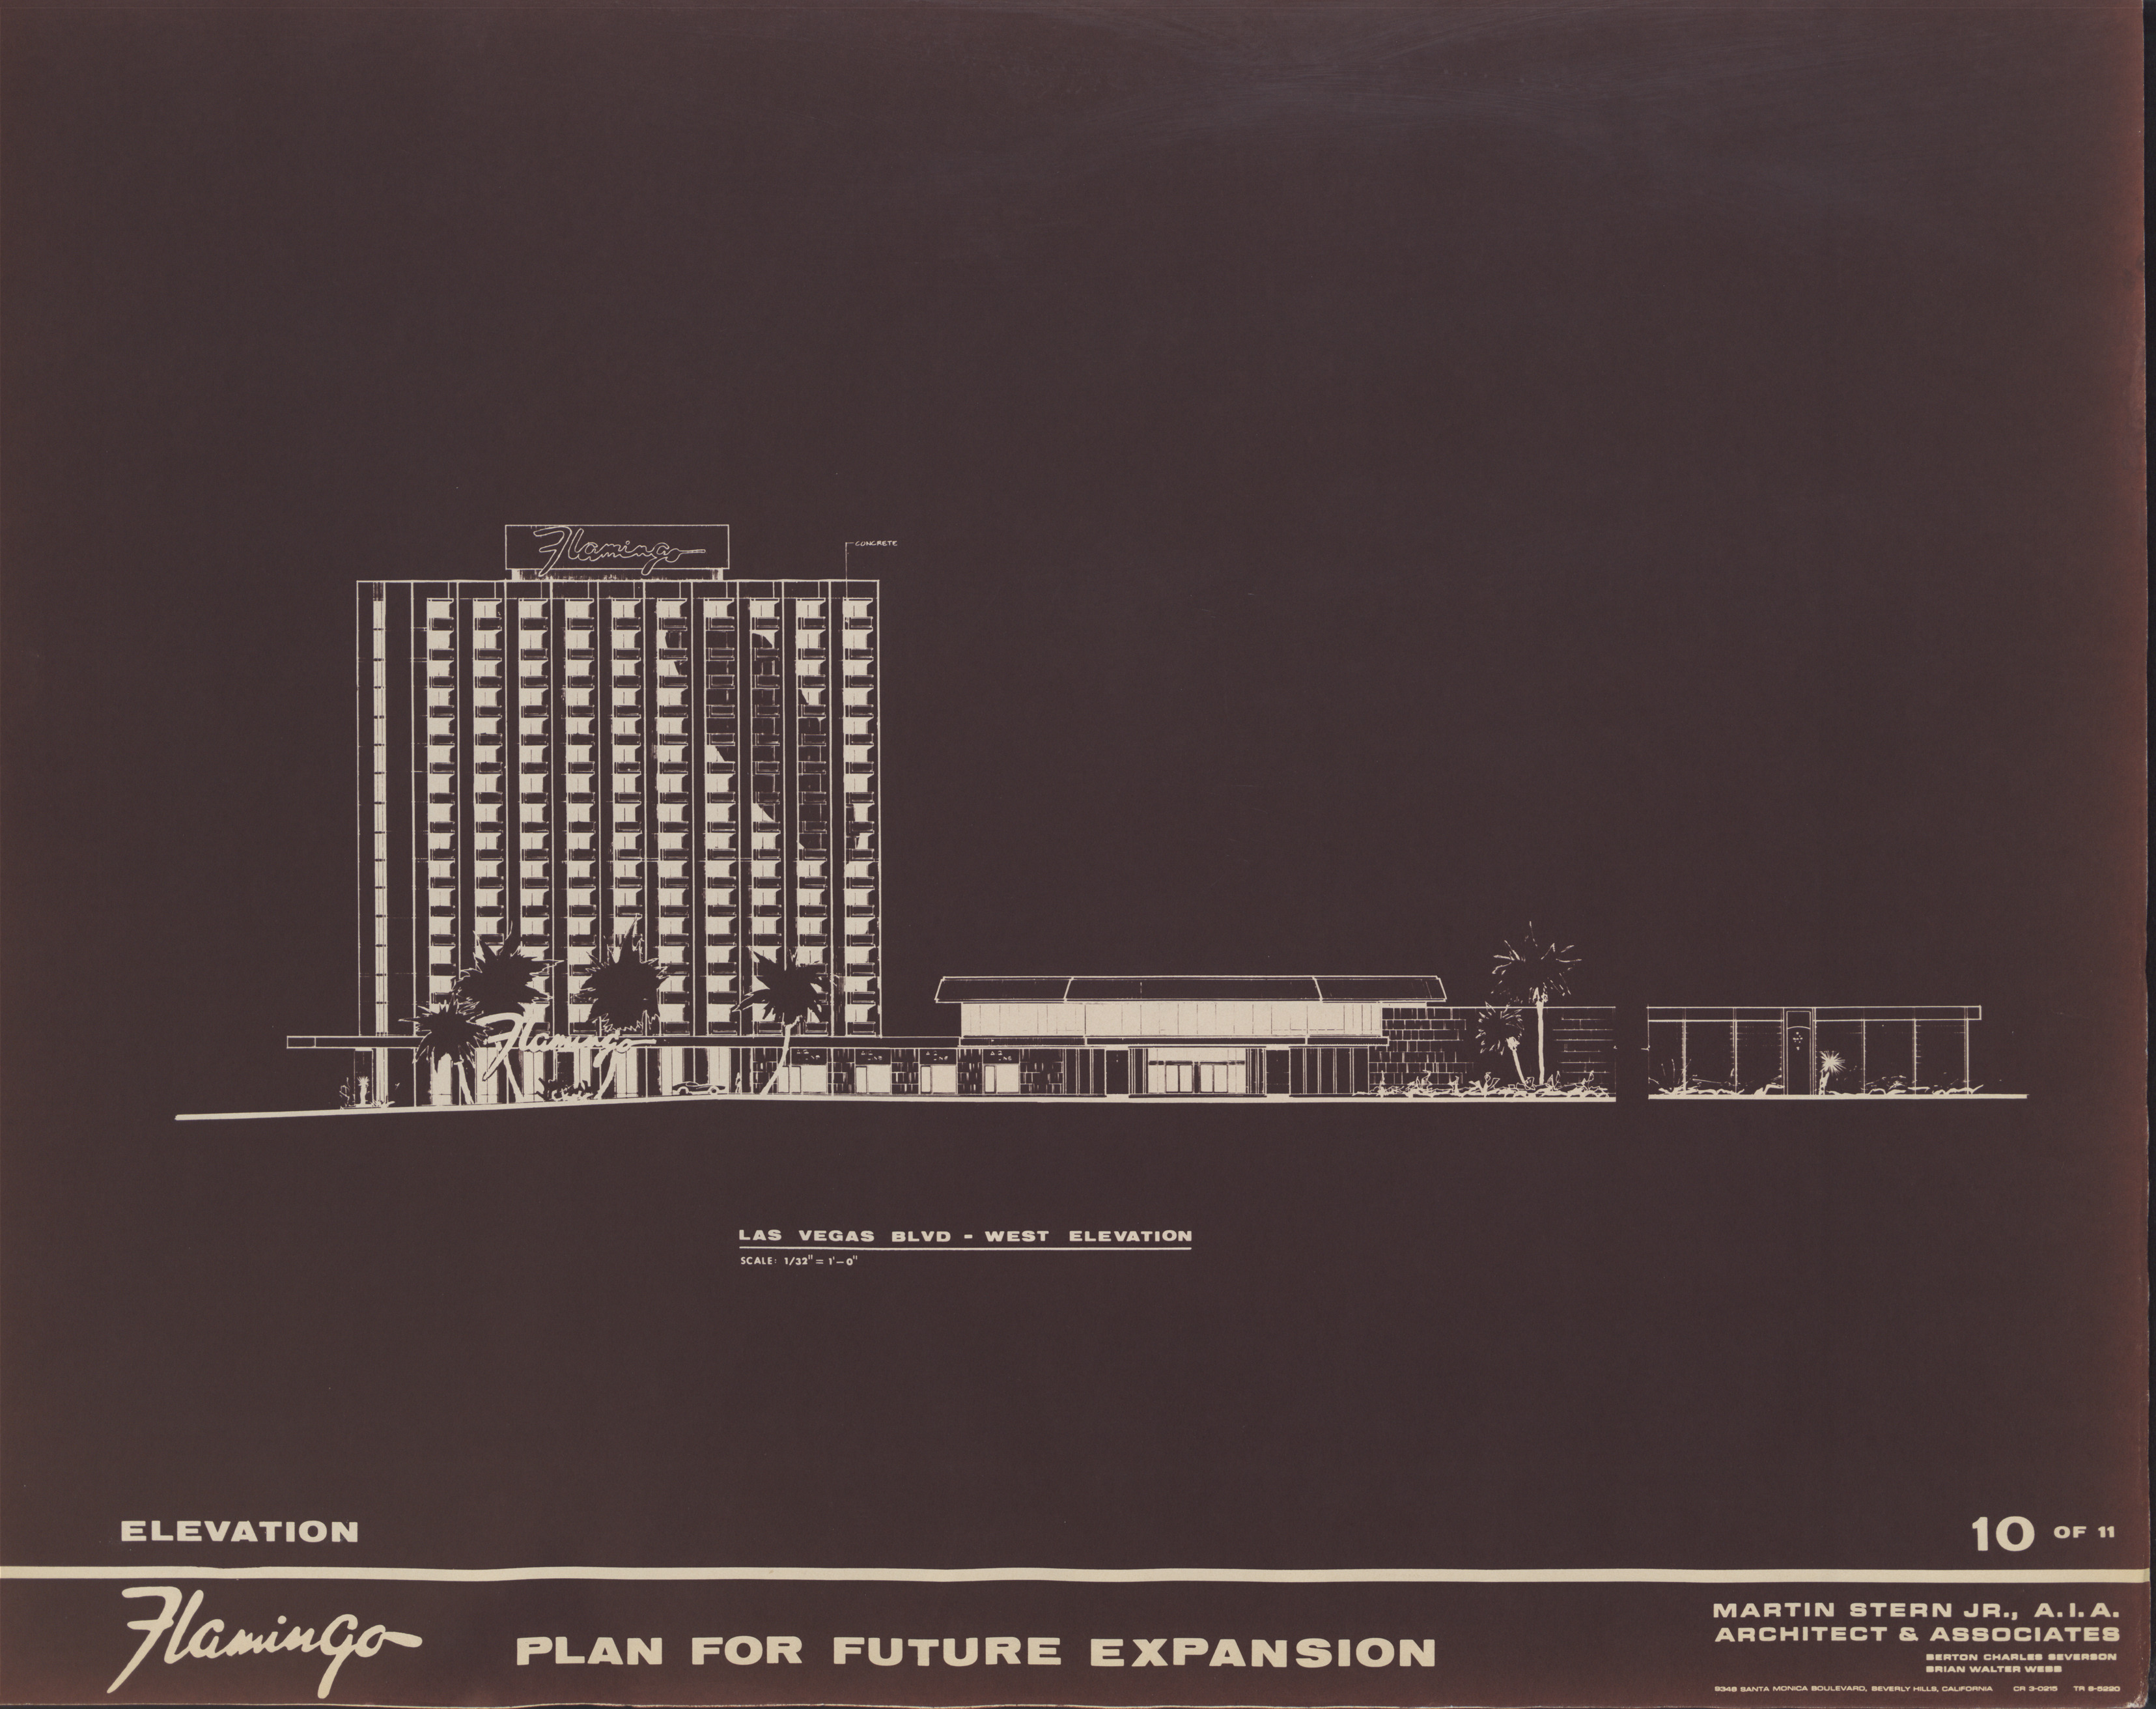 Flamingo Plan for Future Expansion Proposal, image 10